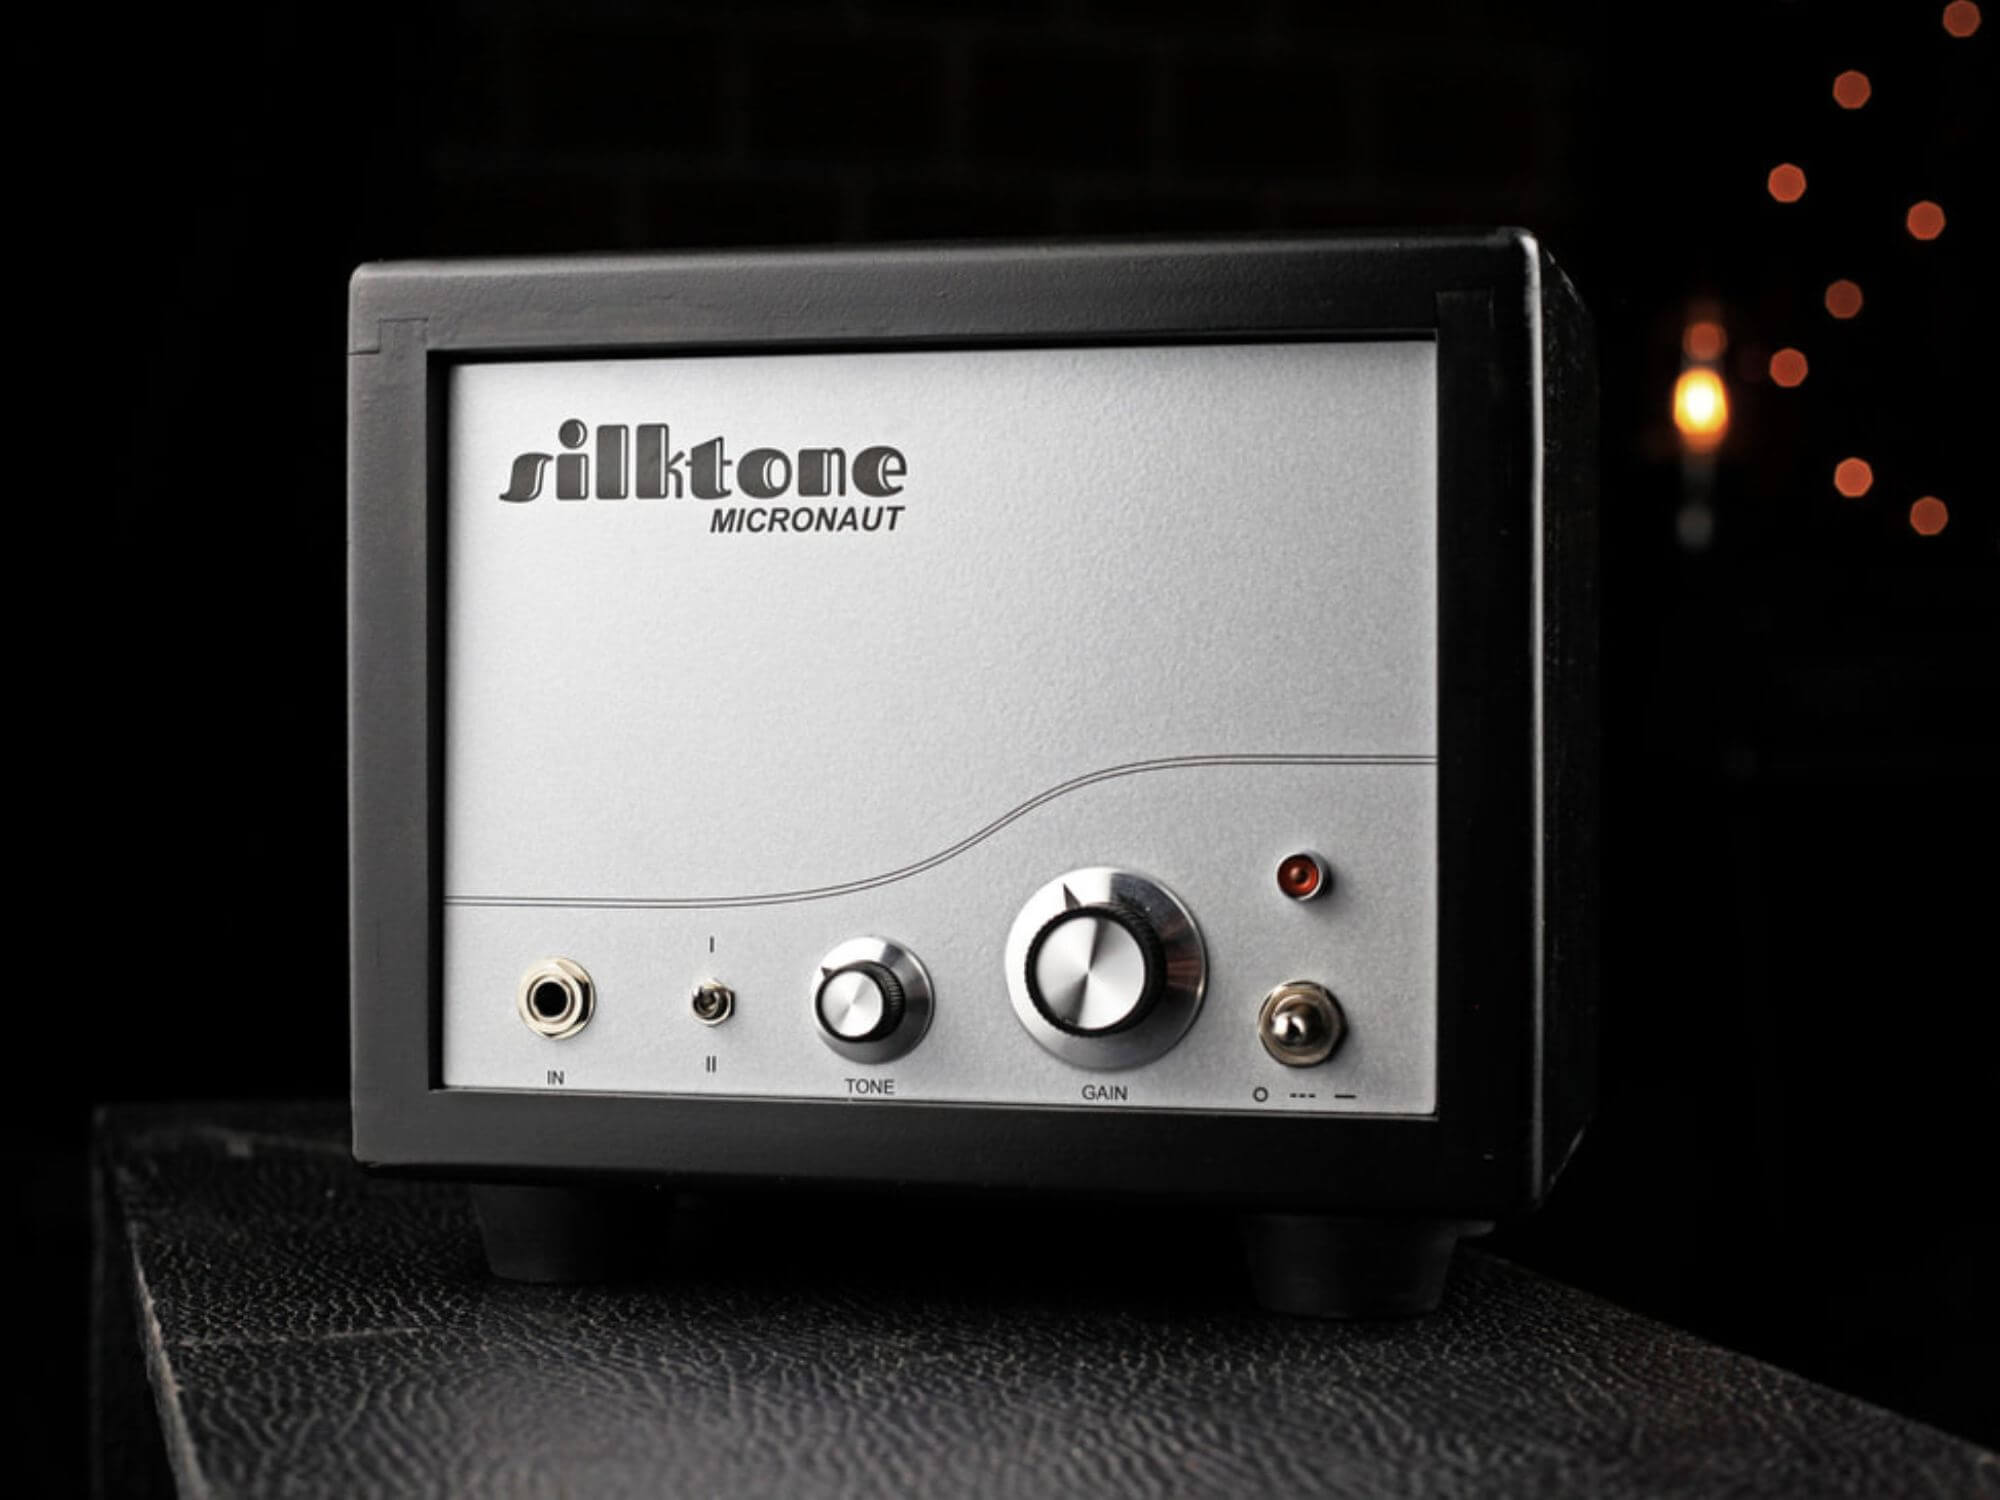 Silktone's Micronaut amplifier